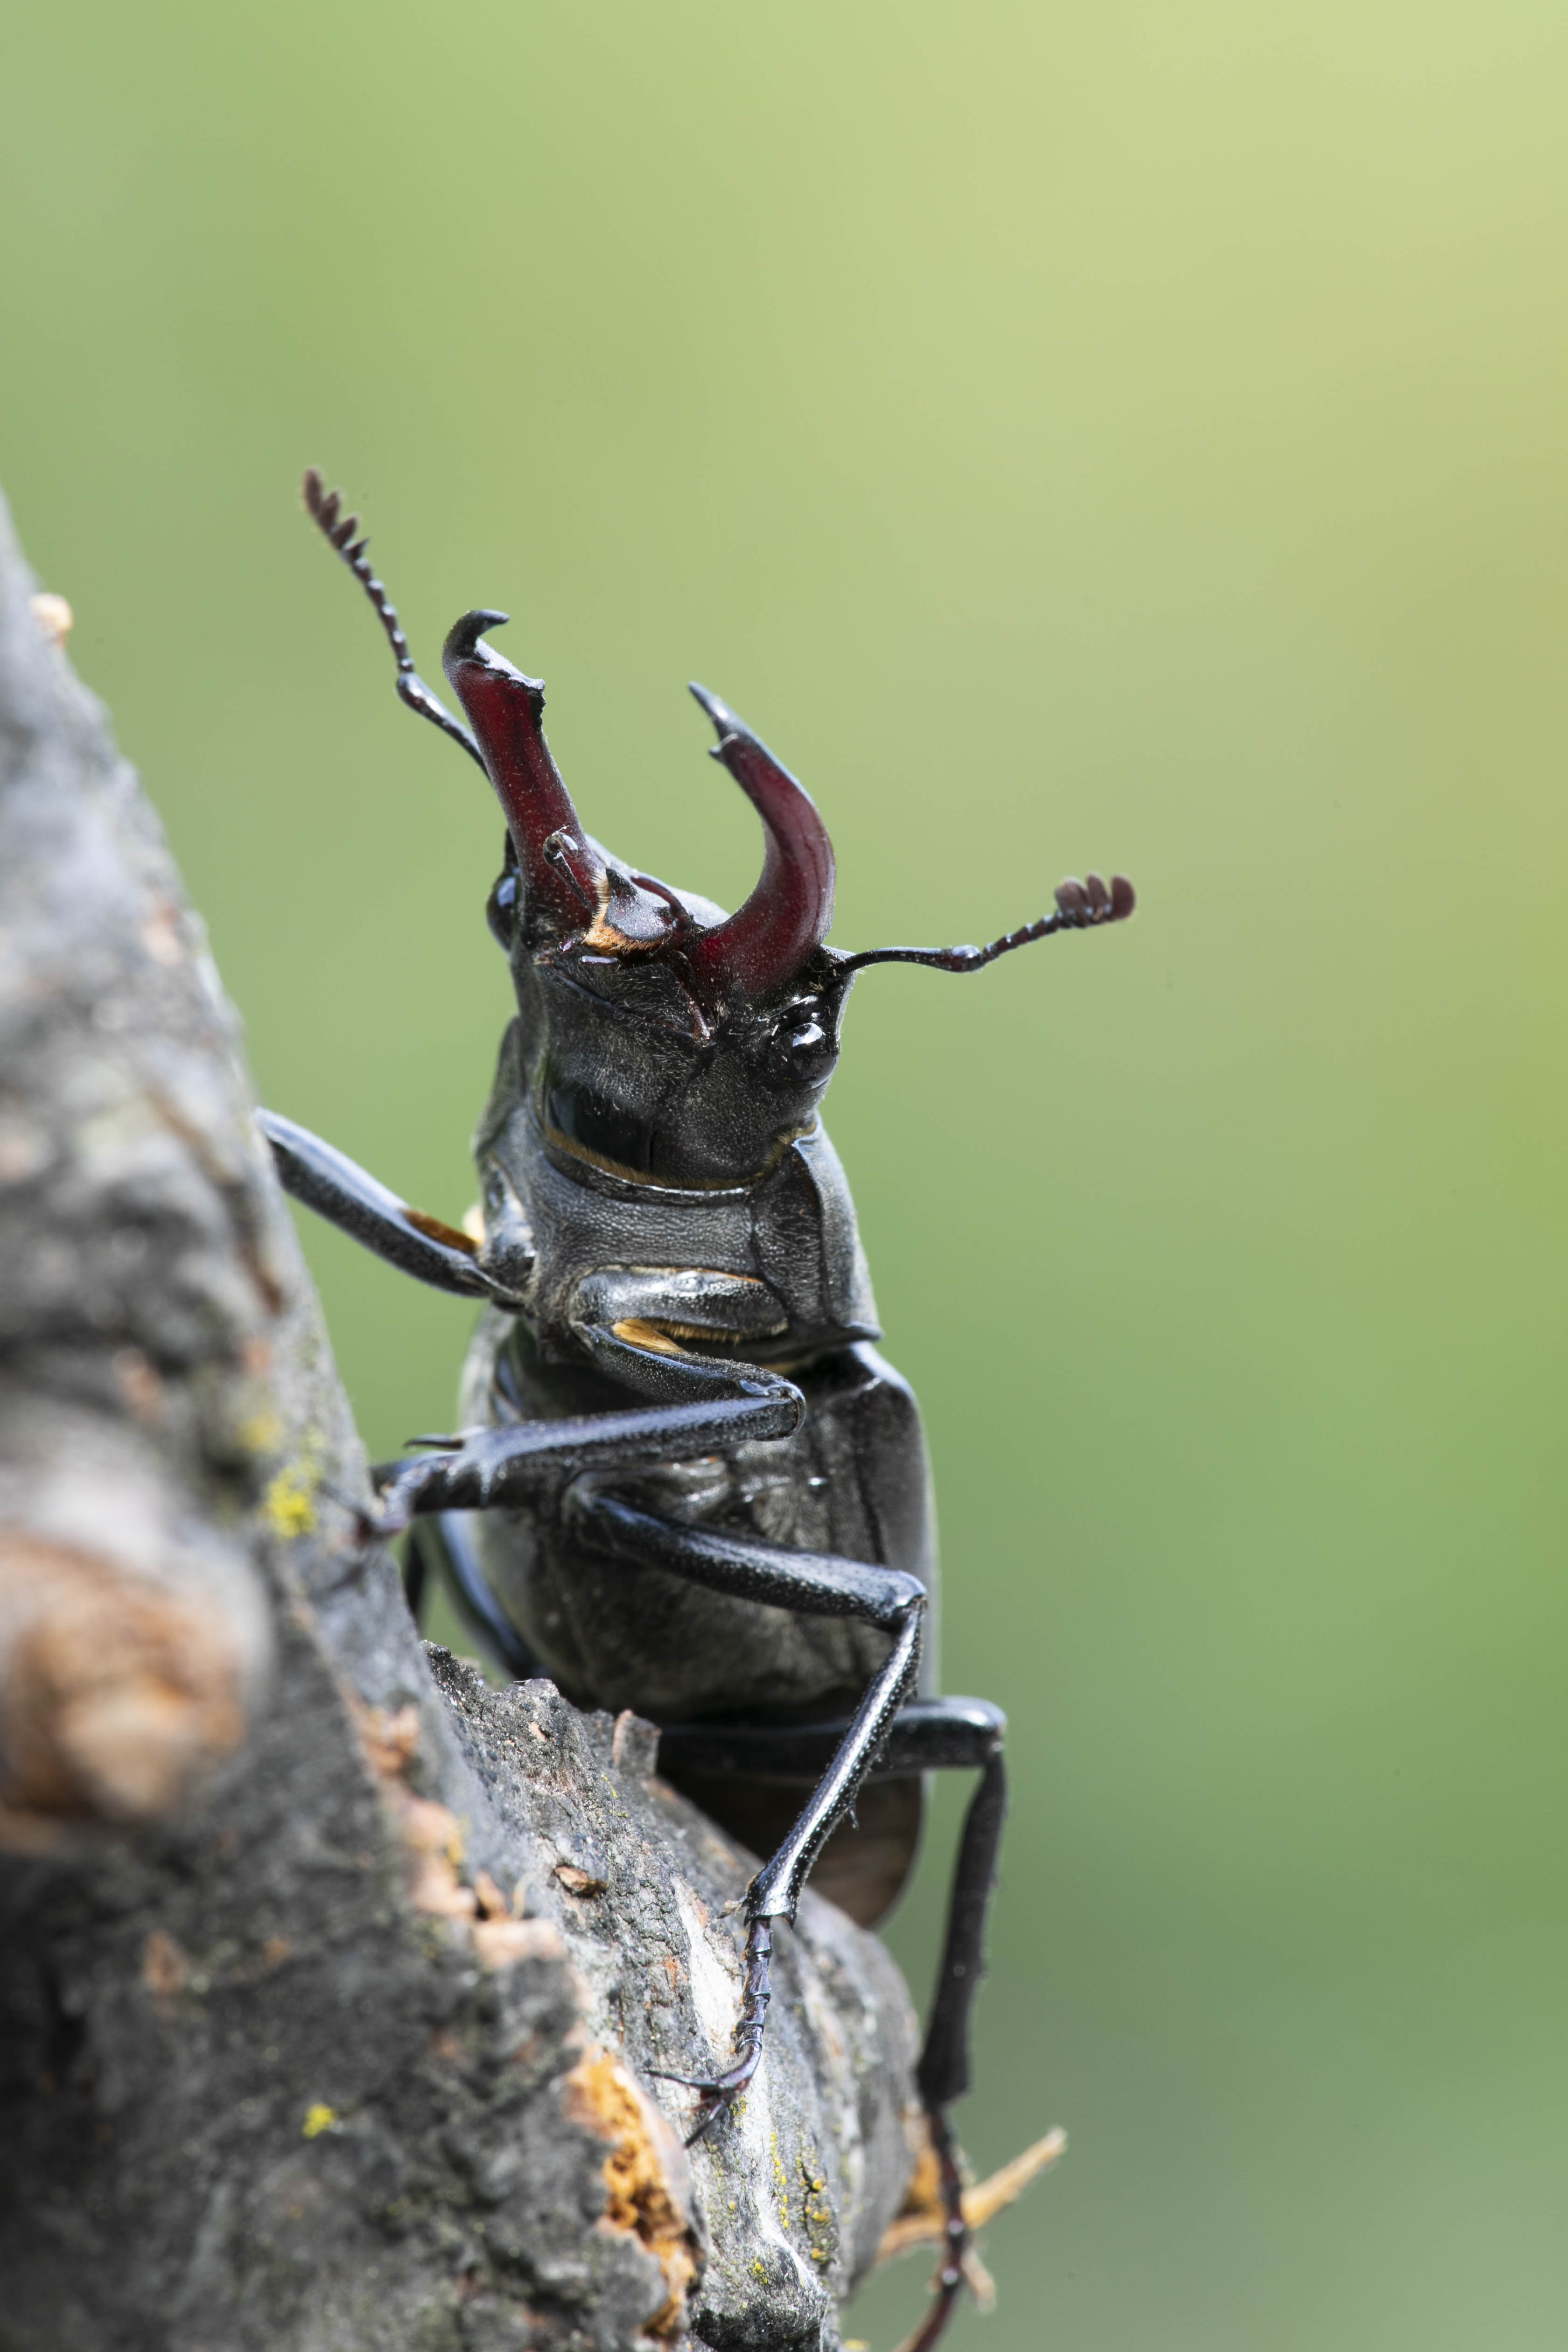 European stag beetle (Lucanus cervus) - 7/2020 - Bonatchiesse (CH)